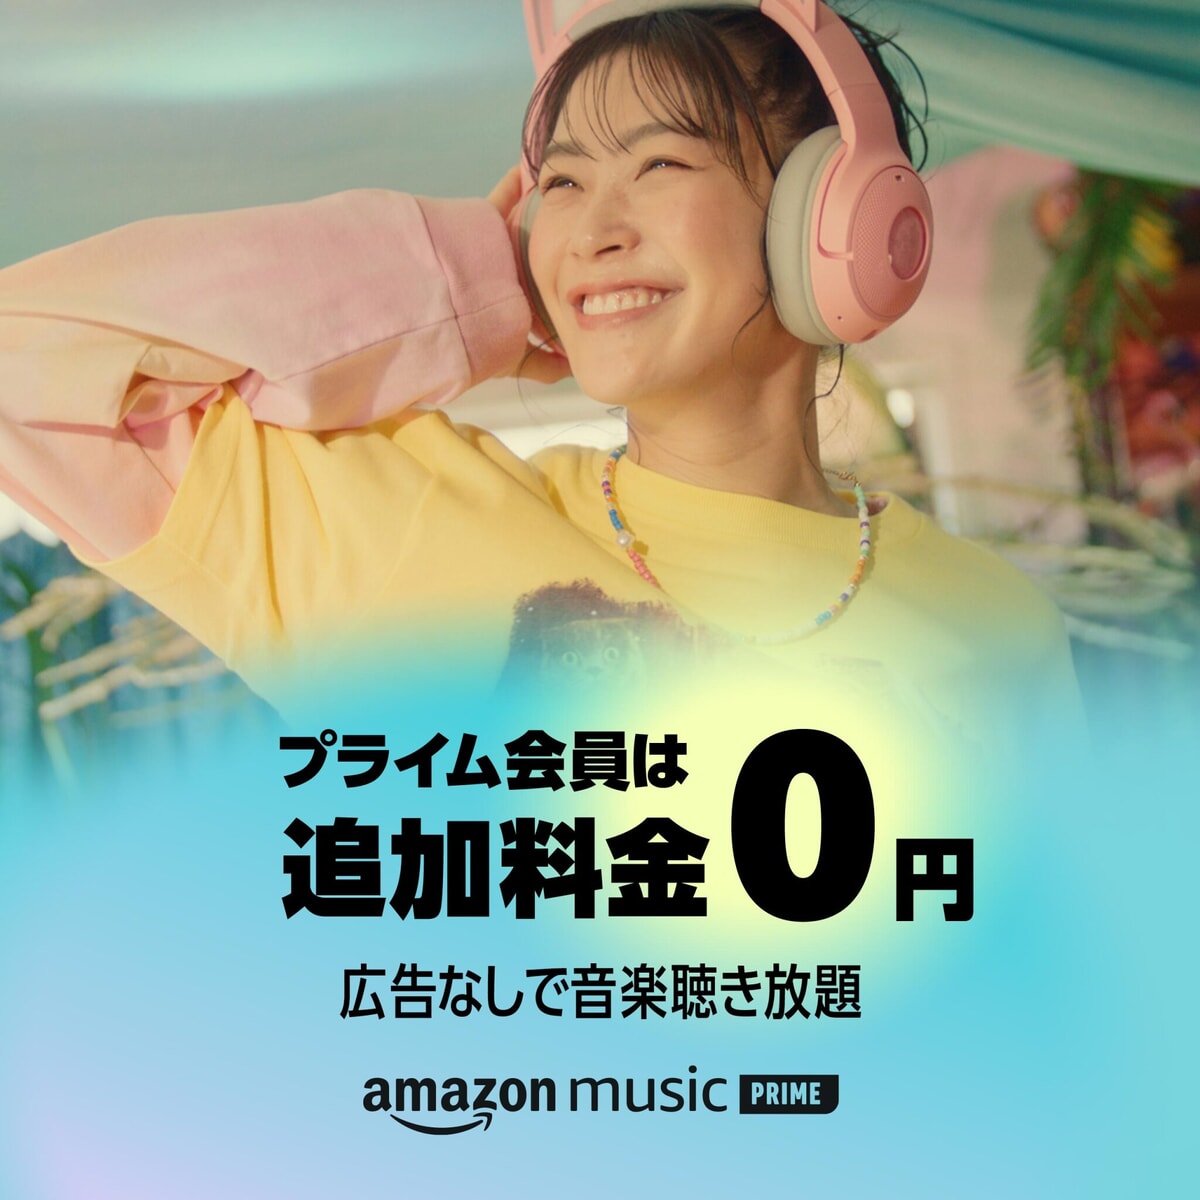 Amazon Prime Music キャンペーン